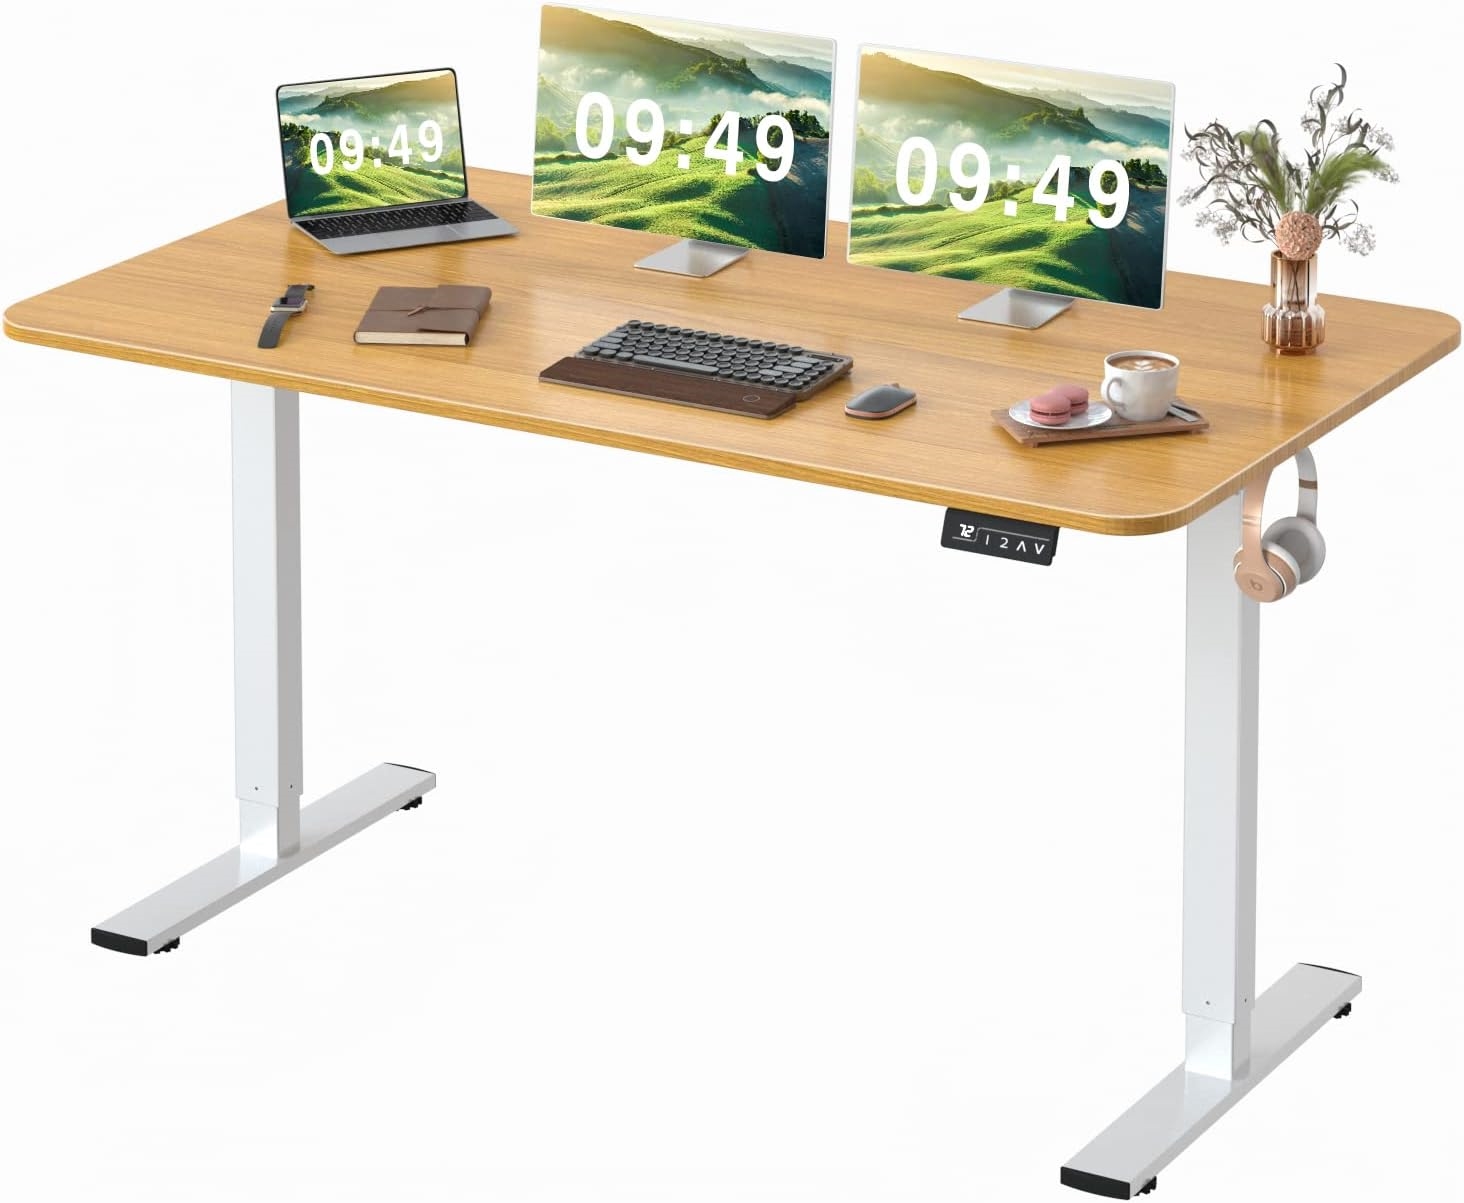 Furmax Height Adjustable Standing Desk | DeviceDaily.com